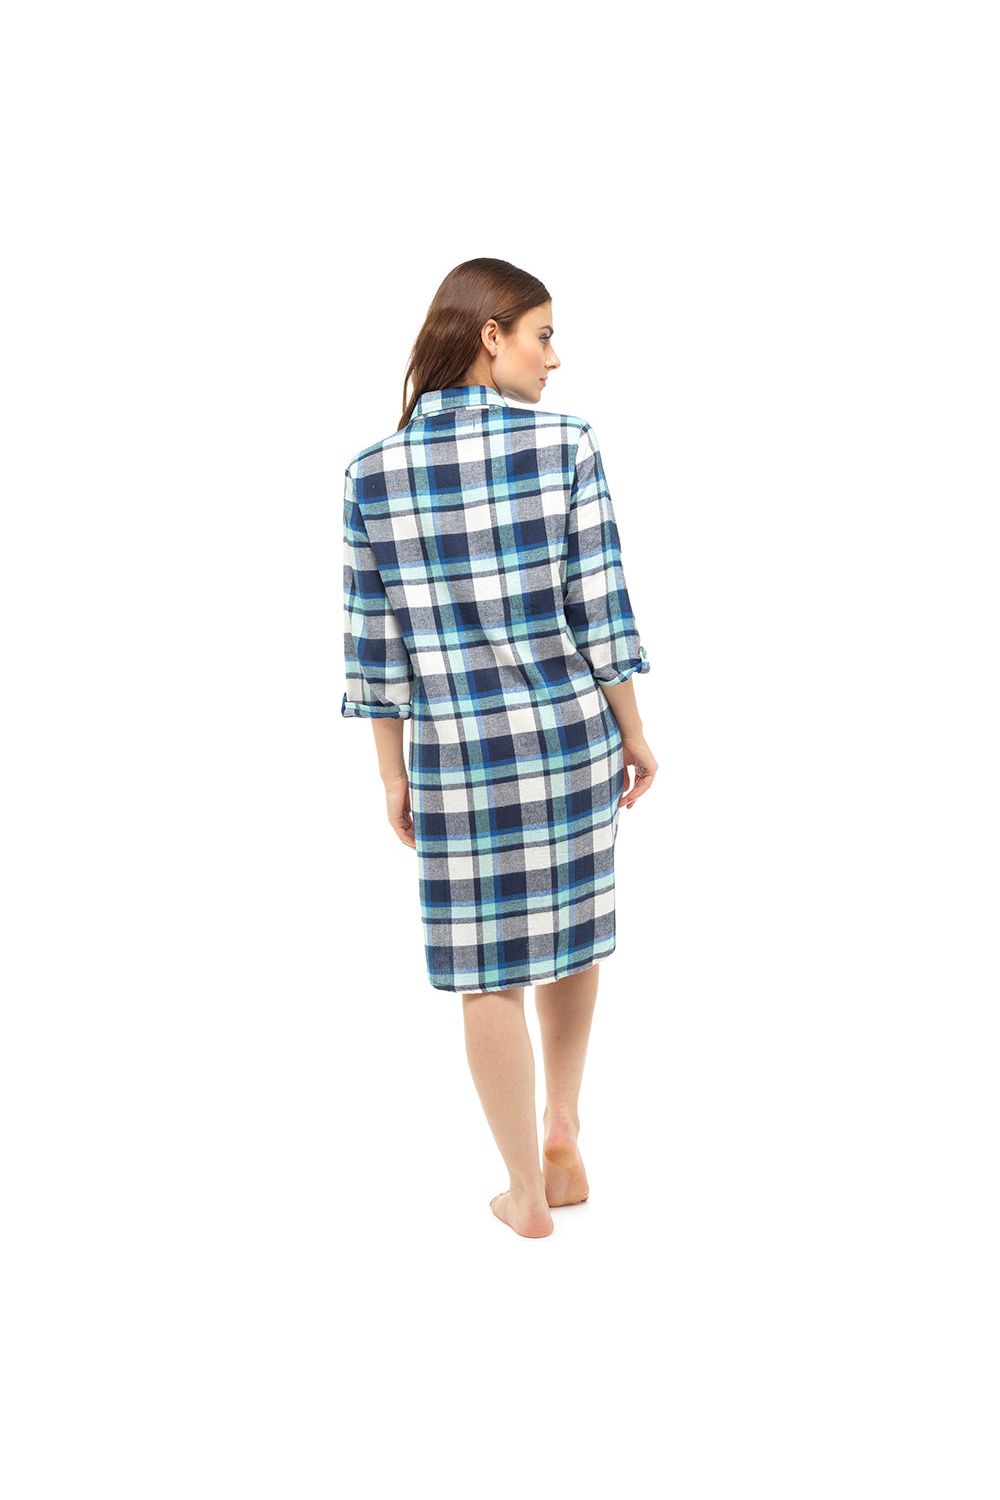 Ladies Nightshirt - Pyjamas.com